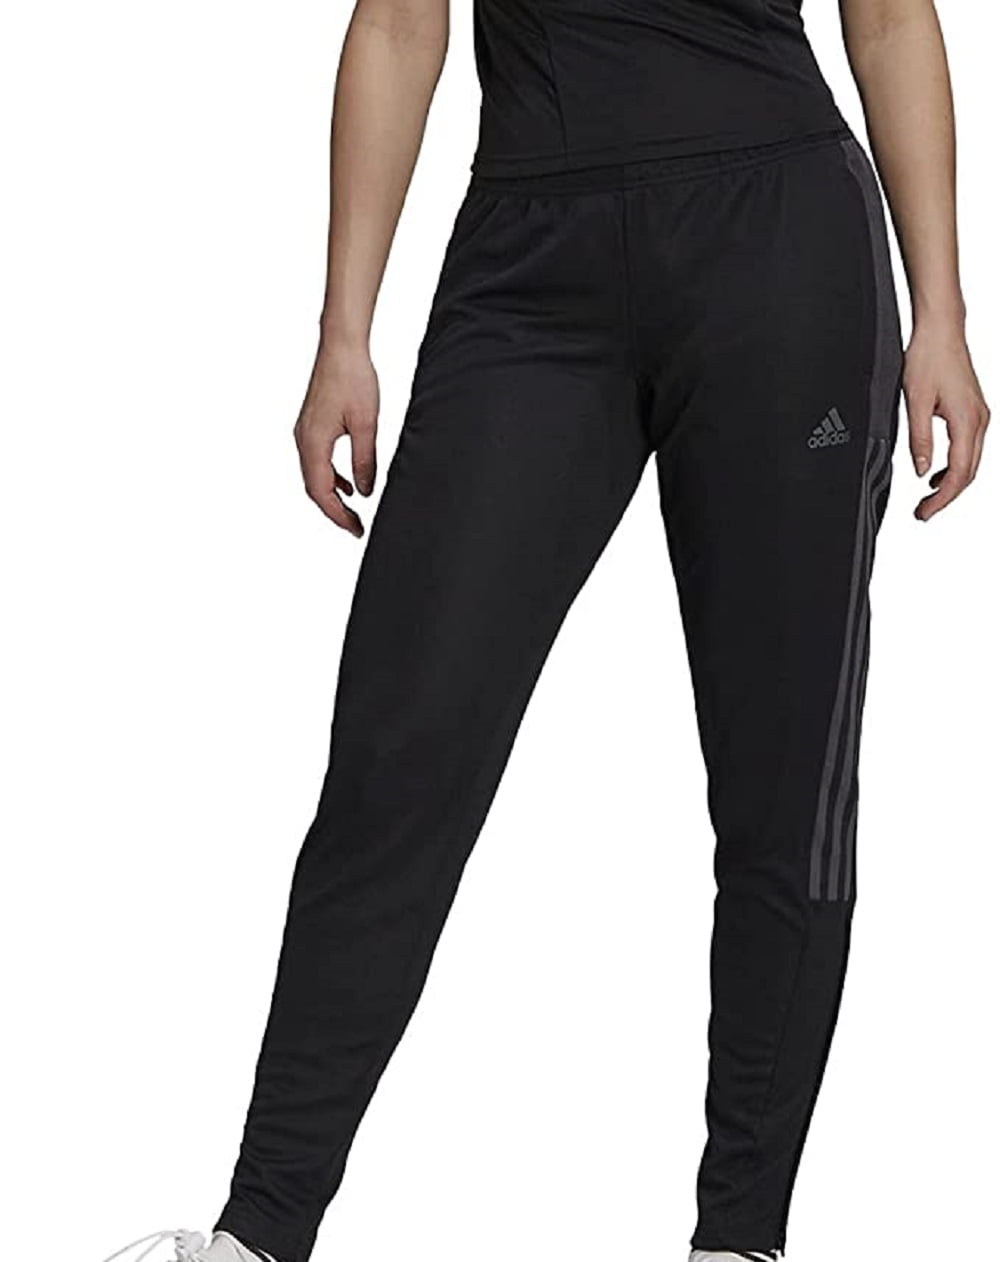 Adidas Women's Tiro Track Pants, Black/Dark Grey Heather, X-Small 